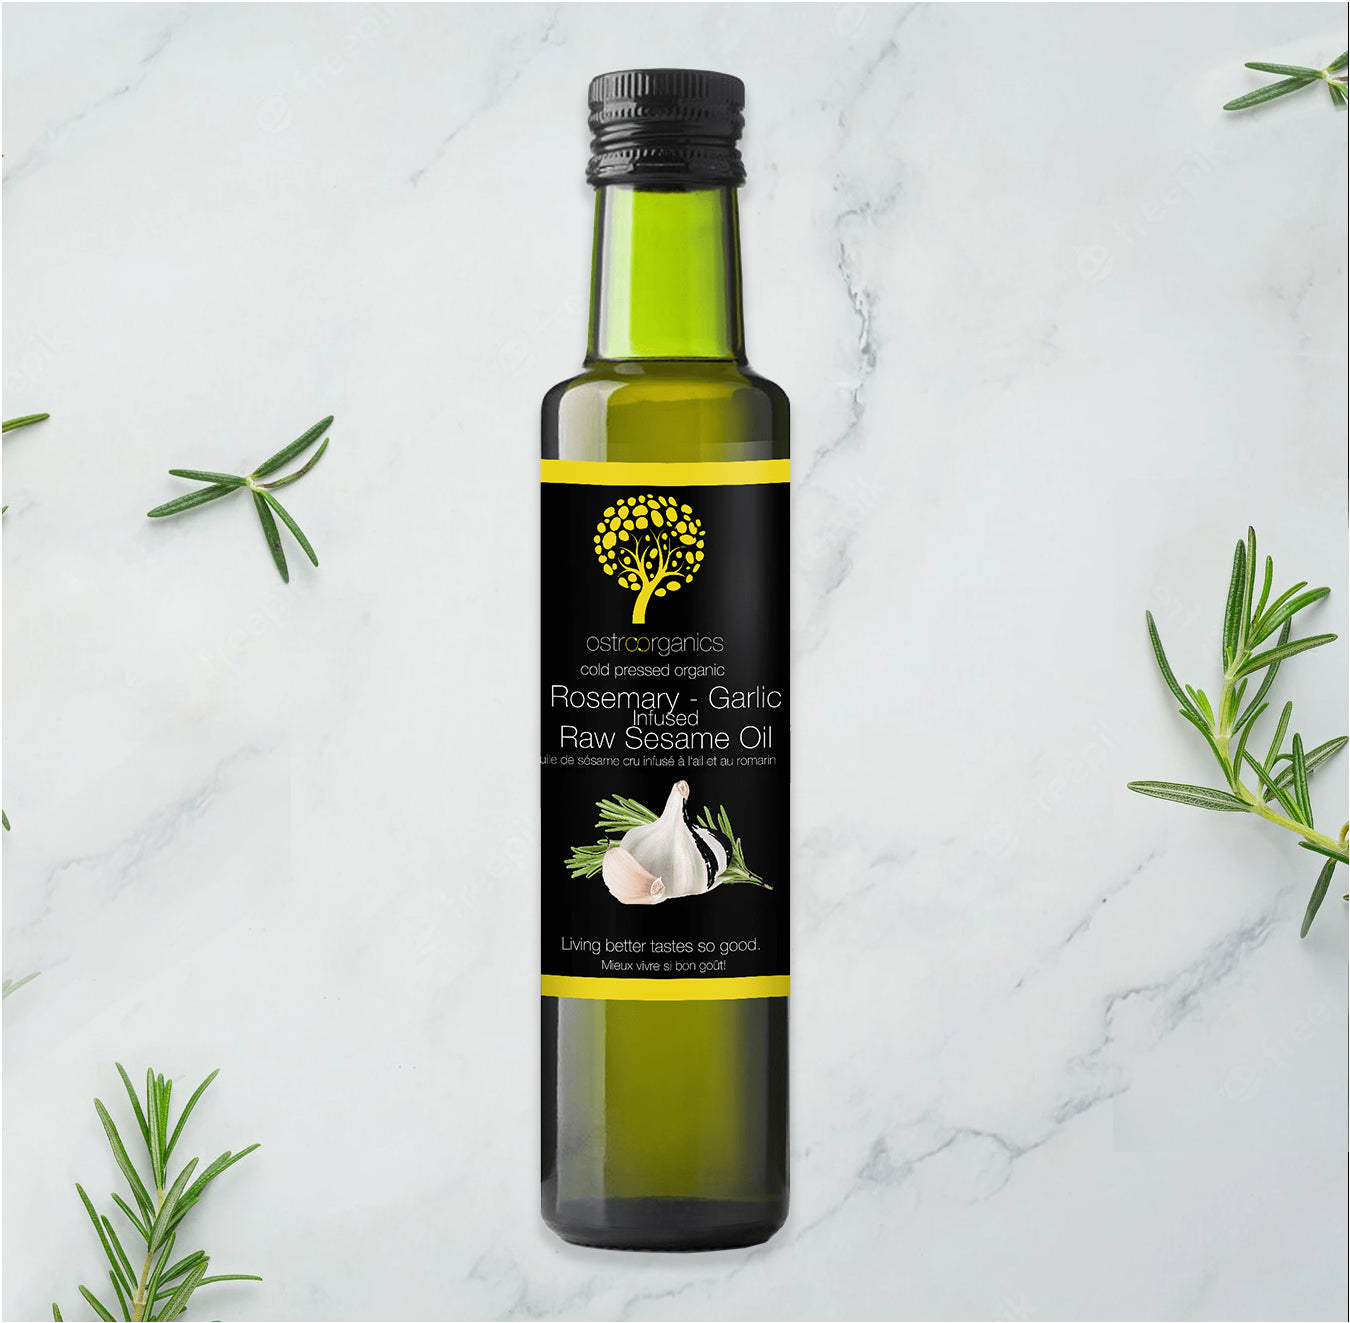 Organic Rosemary - Garlic Infused Raw Sesame Oil